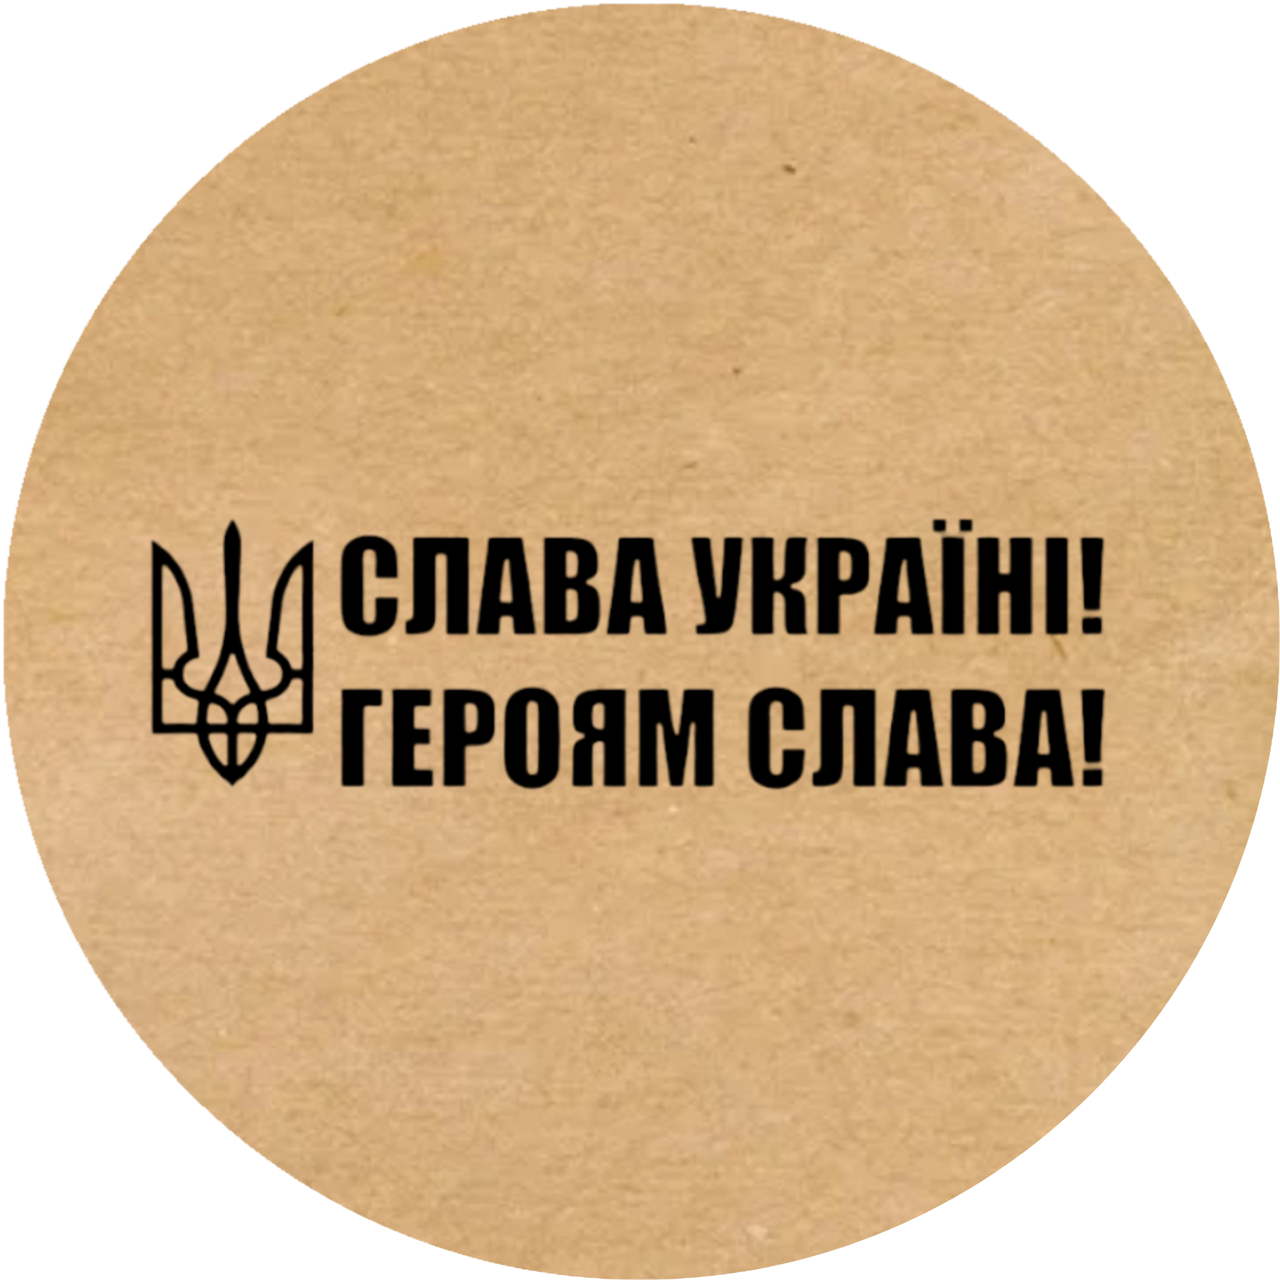 Етикетка кругла крафт "Слава Україні! Героям Слава!", Діаметр 50 мм, 250 шт/рулон, Viskom